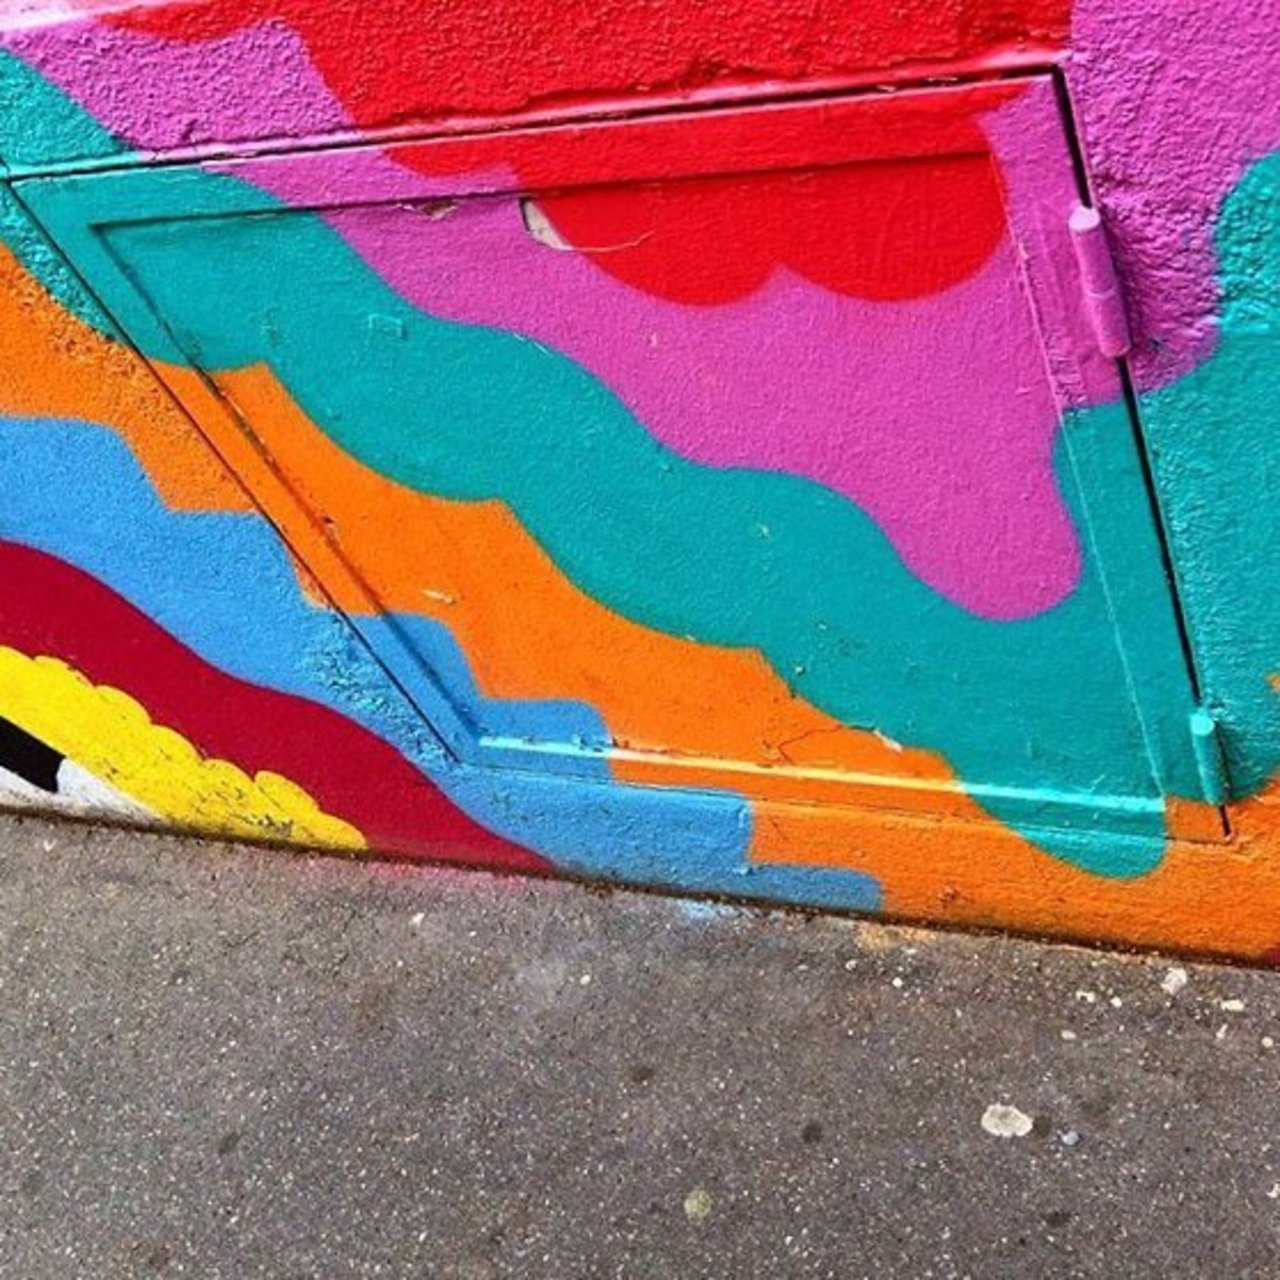 #streetart #streetarteverywhere #streetshot #graffitiart #graffiti #arturbain #urbanart #painting #mur #mural #wall… https://t.co/mjLrkaSXSI